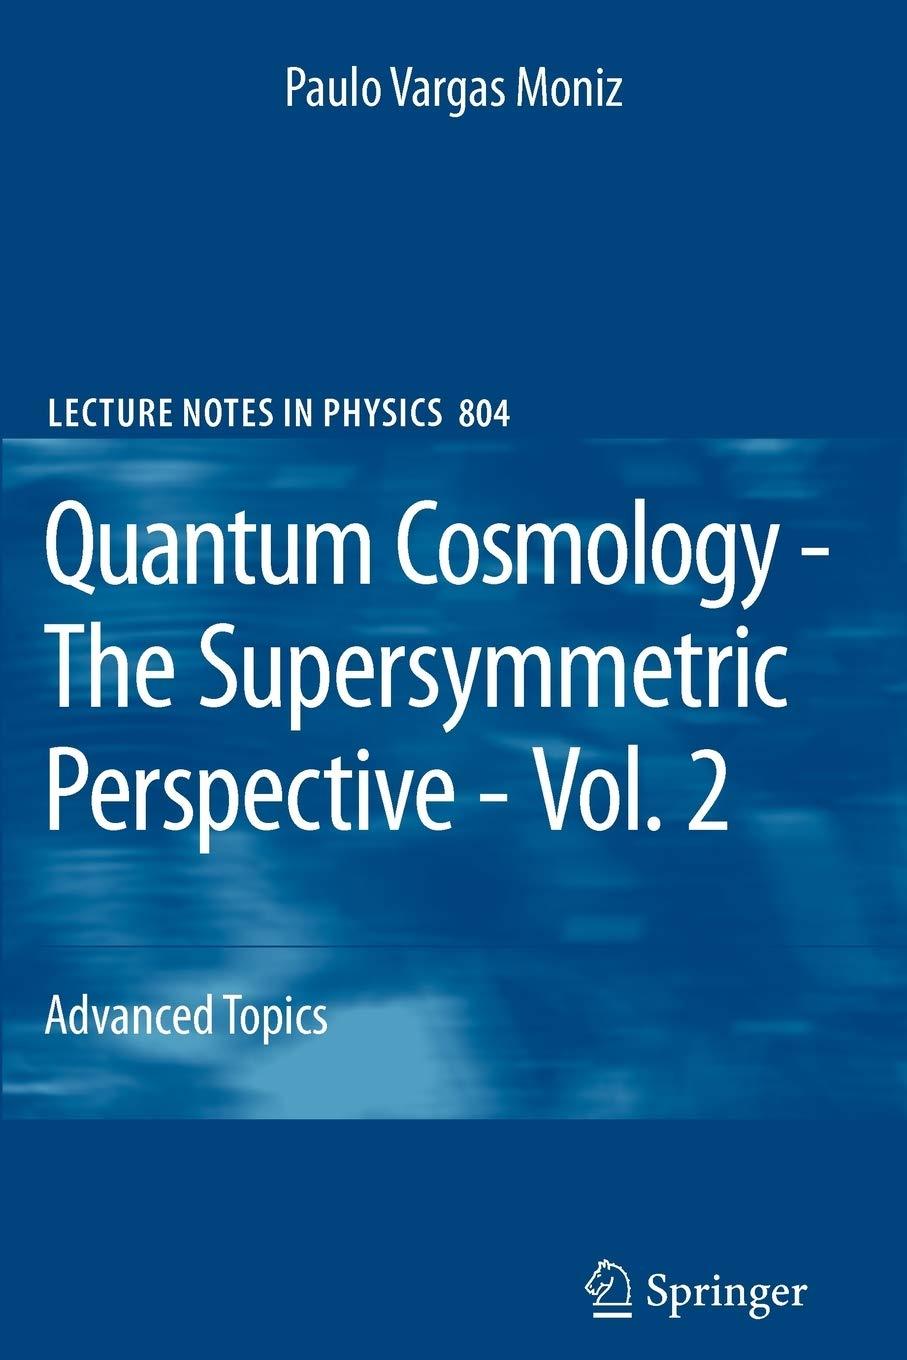 quantum cosmology the supersymmetric perspective vol. 2 advanced topic 1st 2010th edition paulo vargas moniz